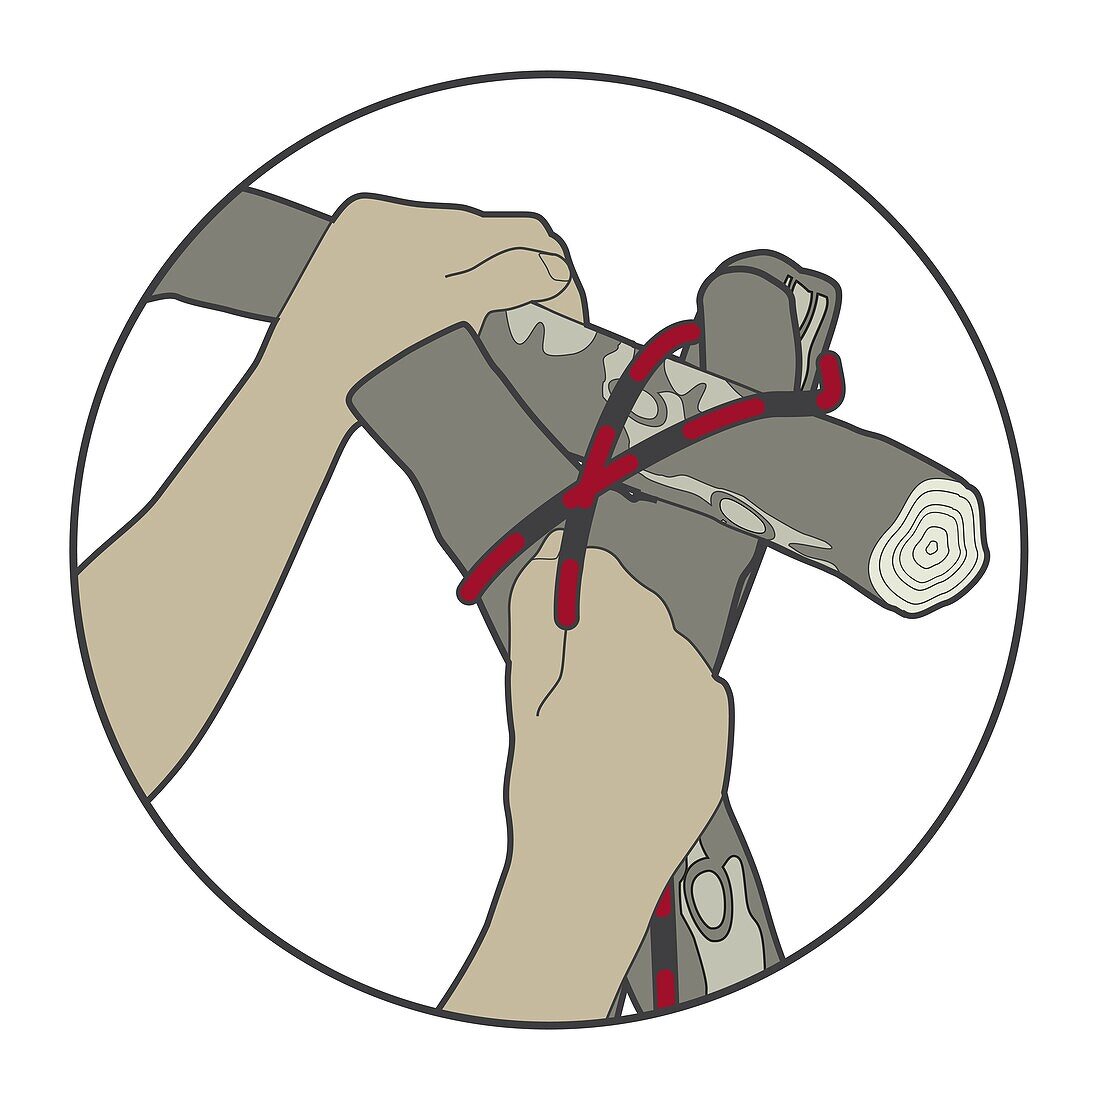 Man tying arbor knot on jungle A-frame, illustration